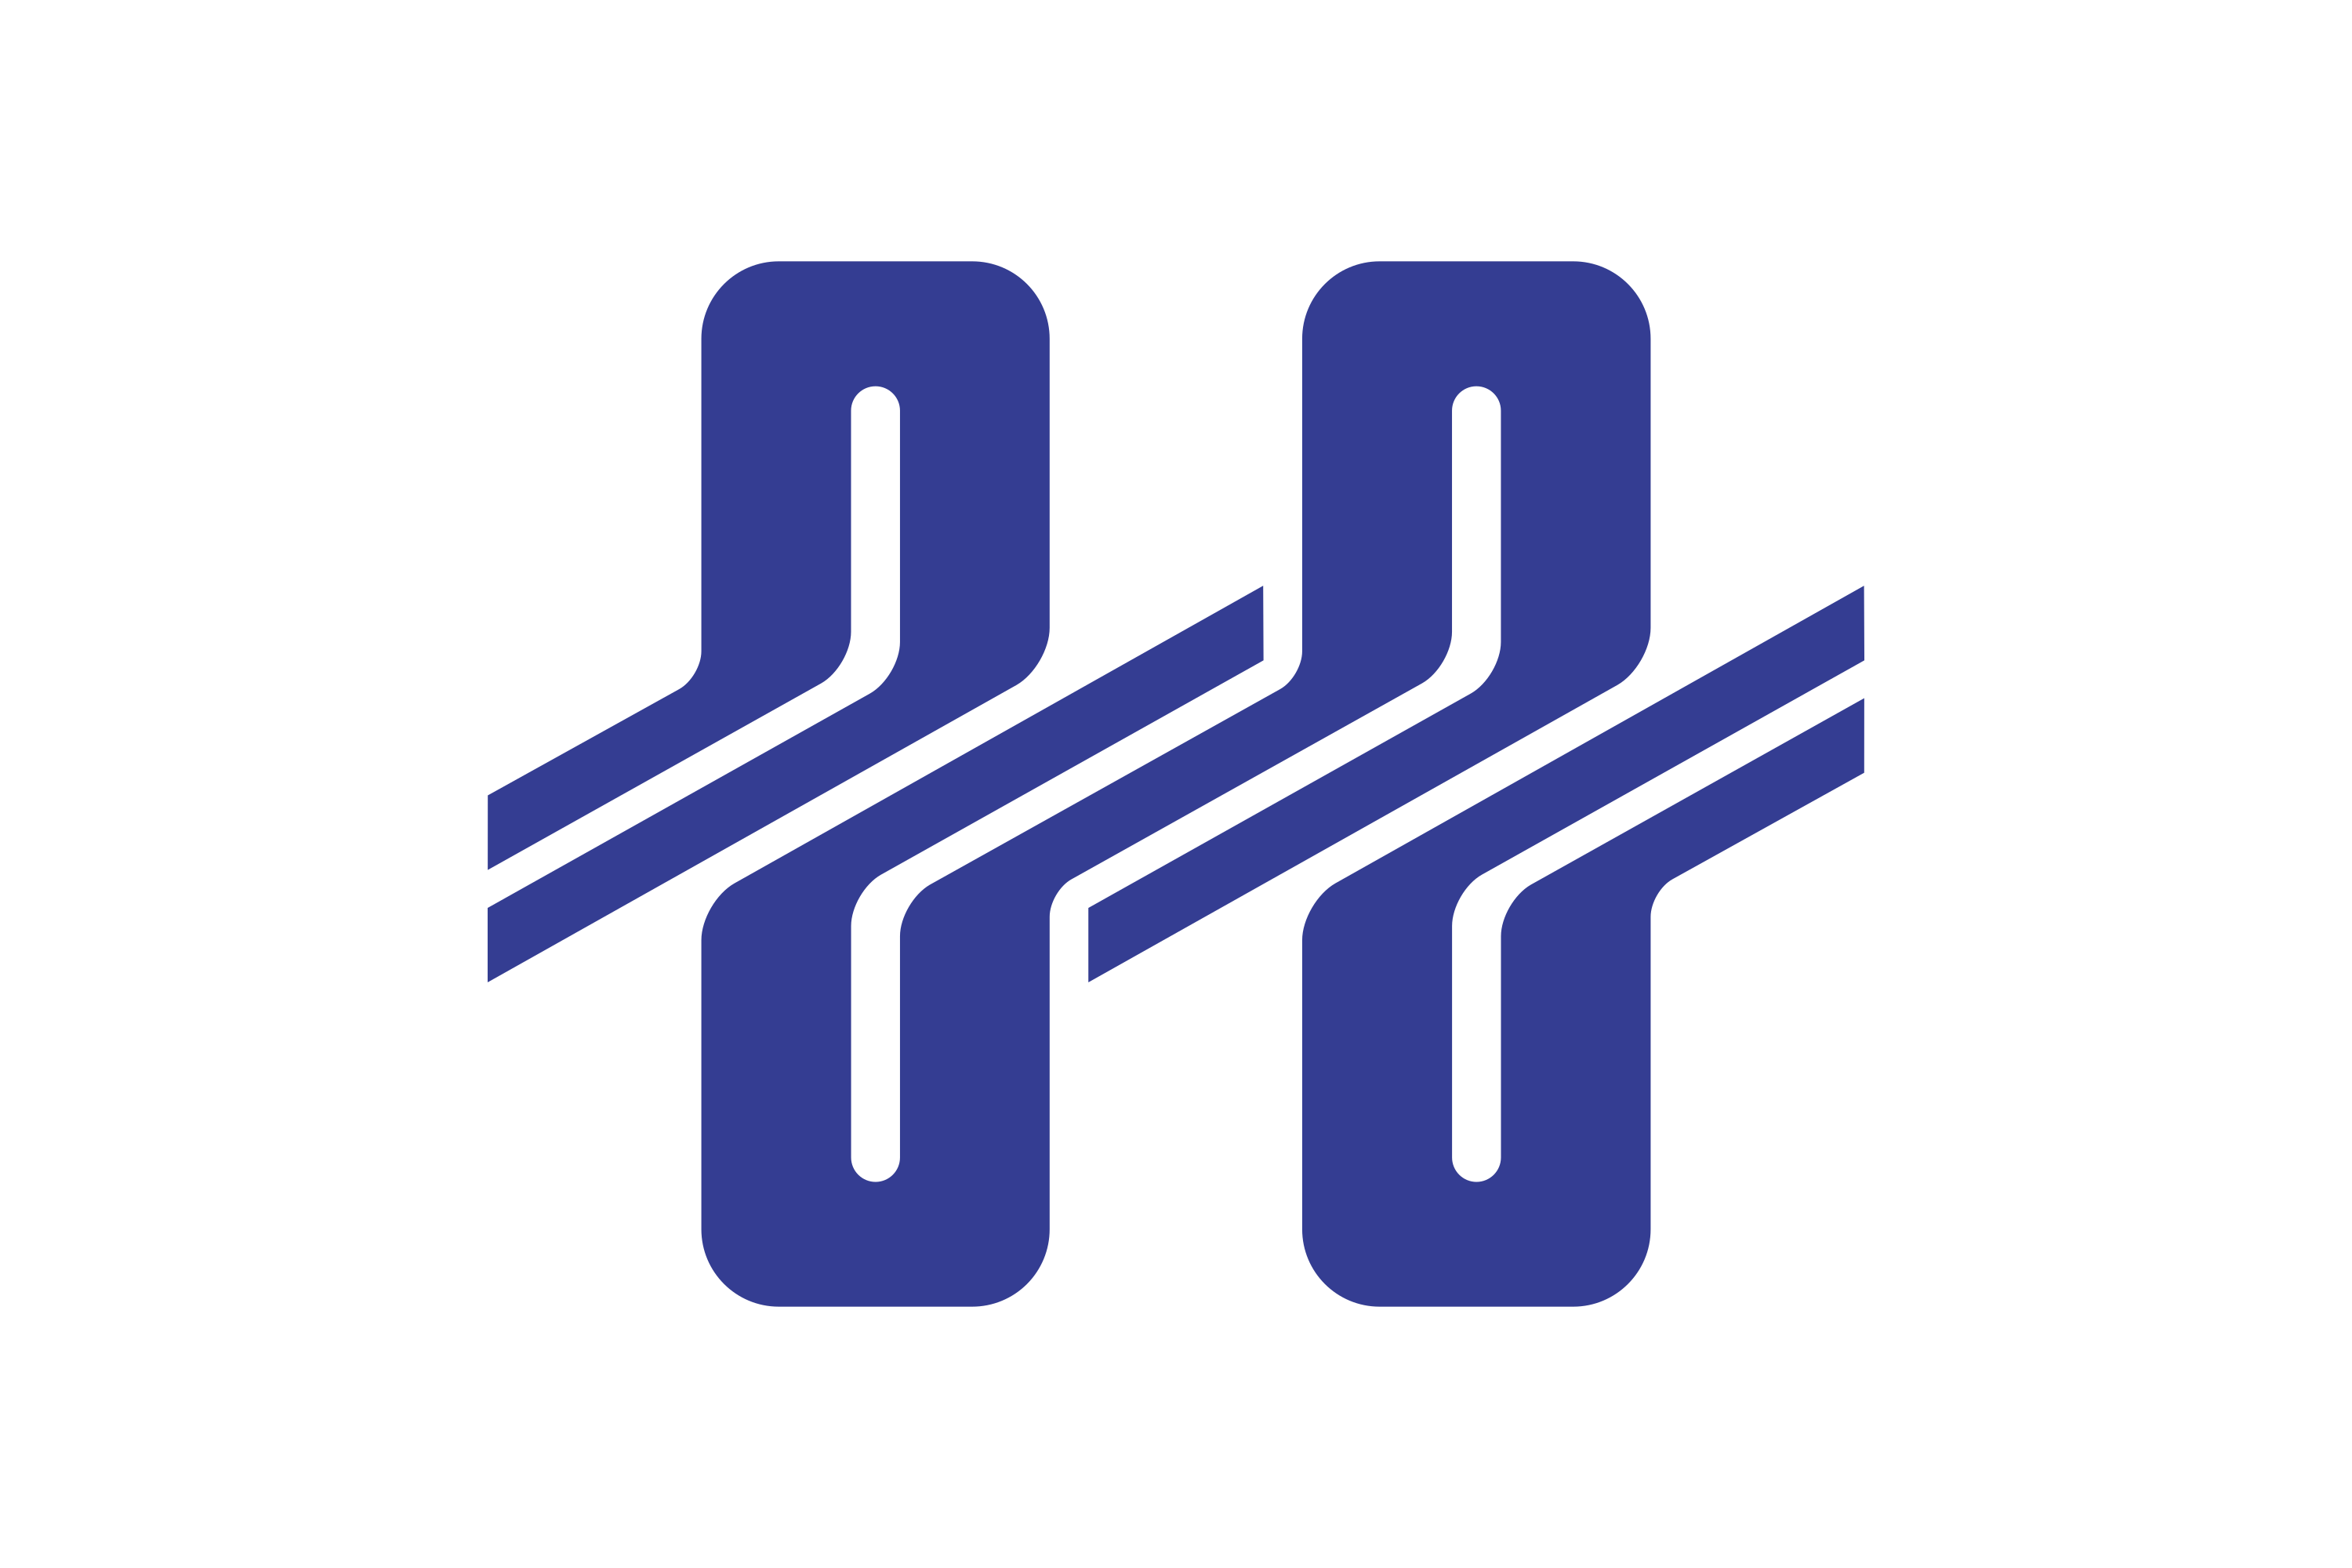 Download Hokuriku Electric Power Company (Hokuriku Denryoku) Logo in